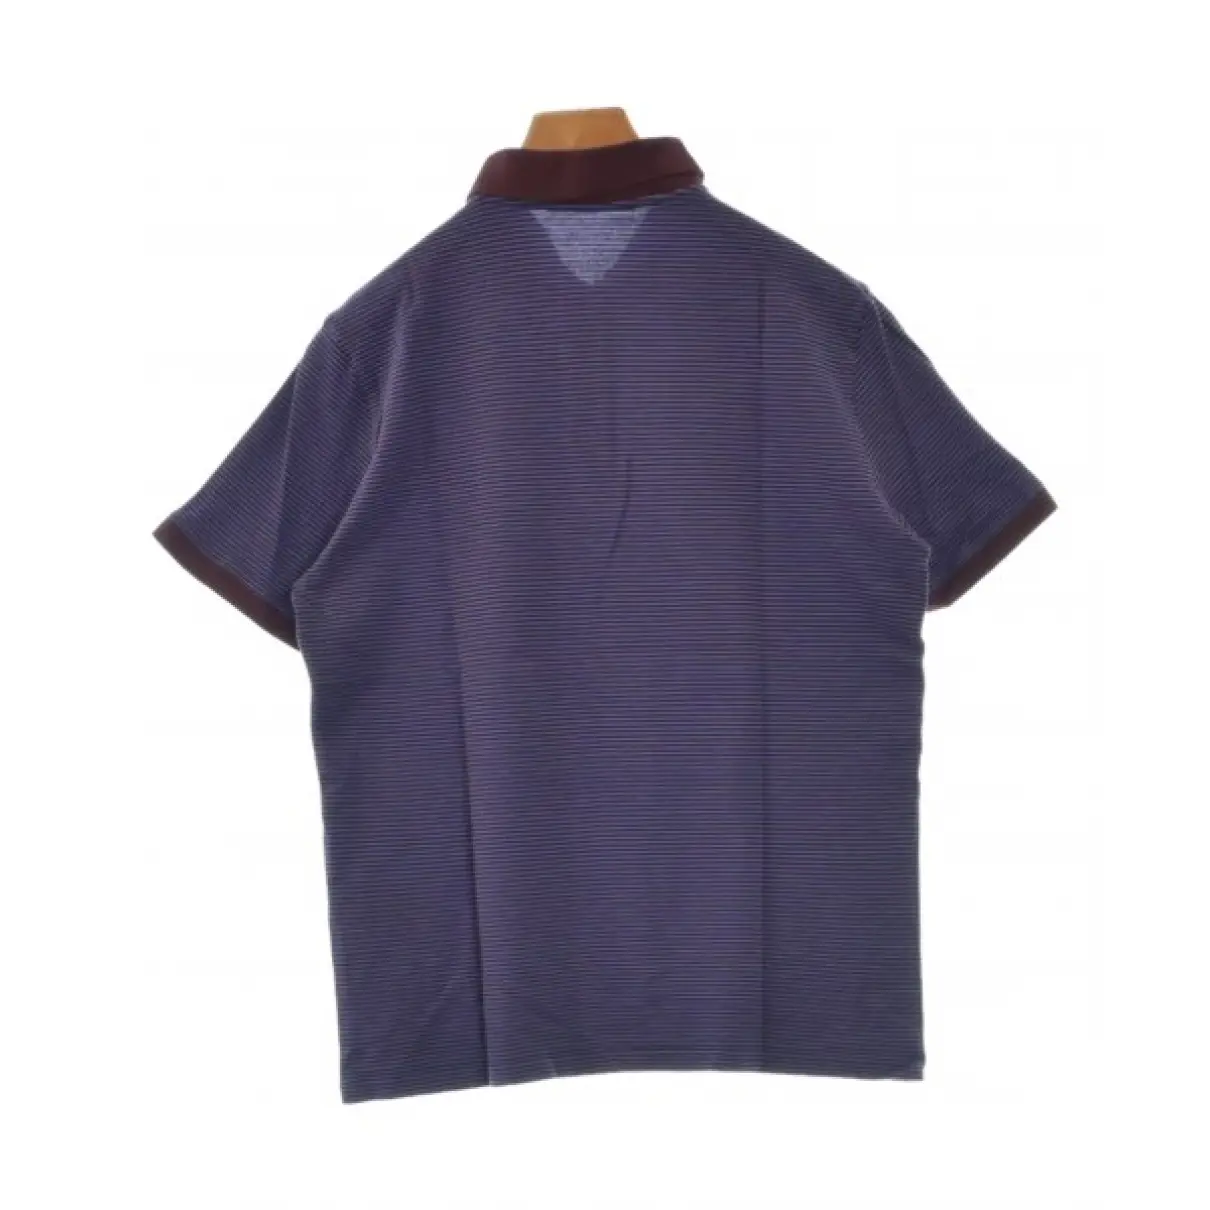 Buy Louis Vuitton Polo shirt online